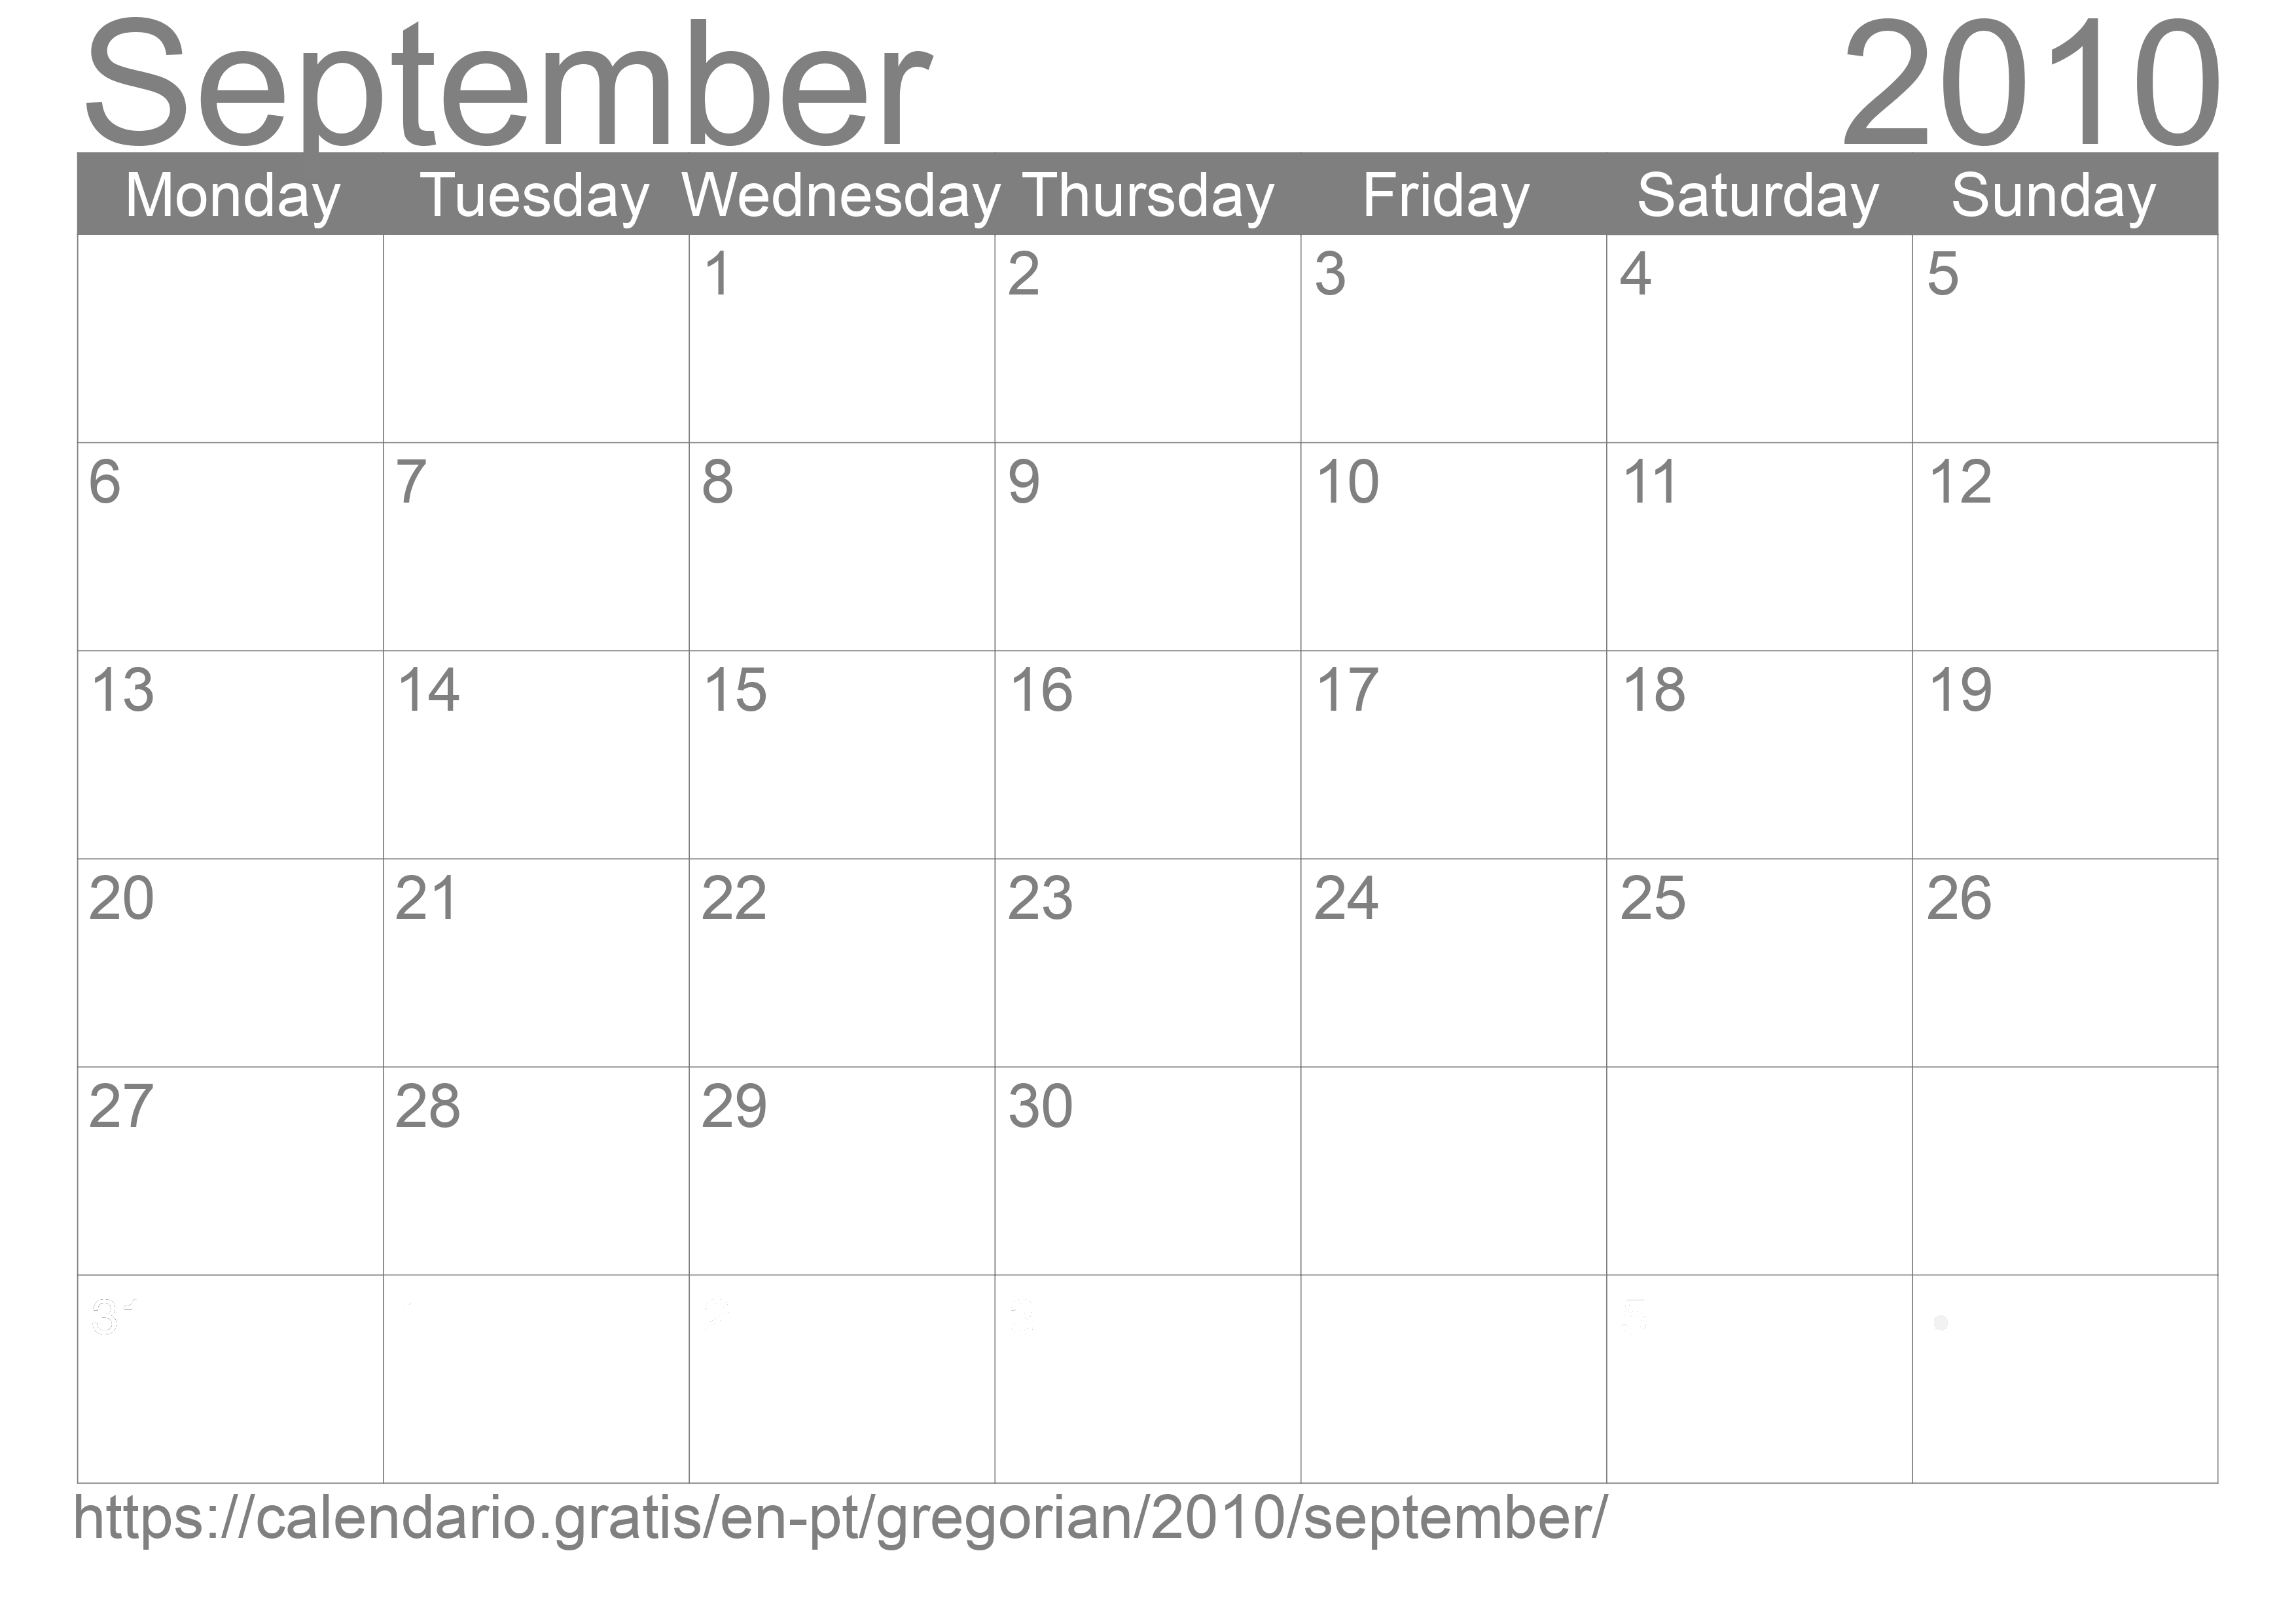 Calendar September 2010 to print